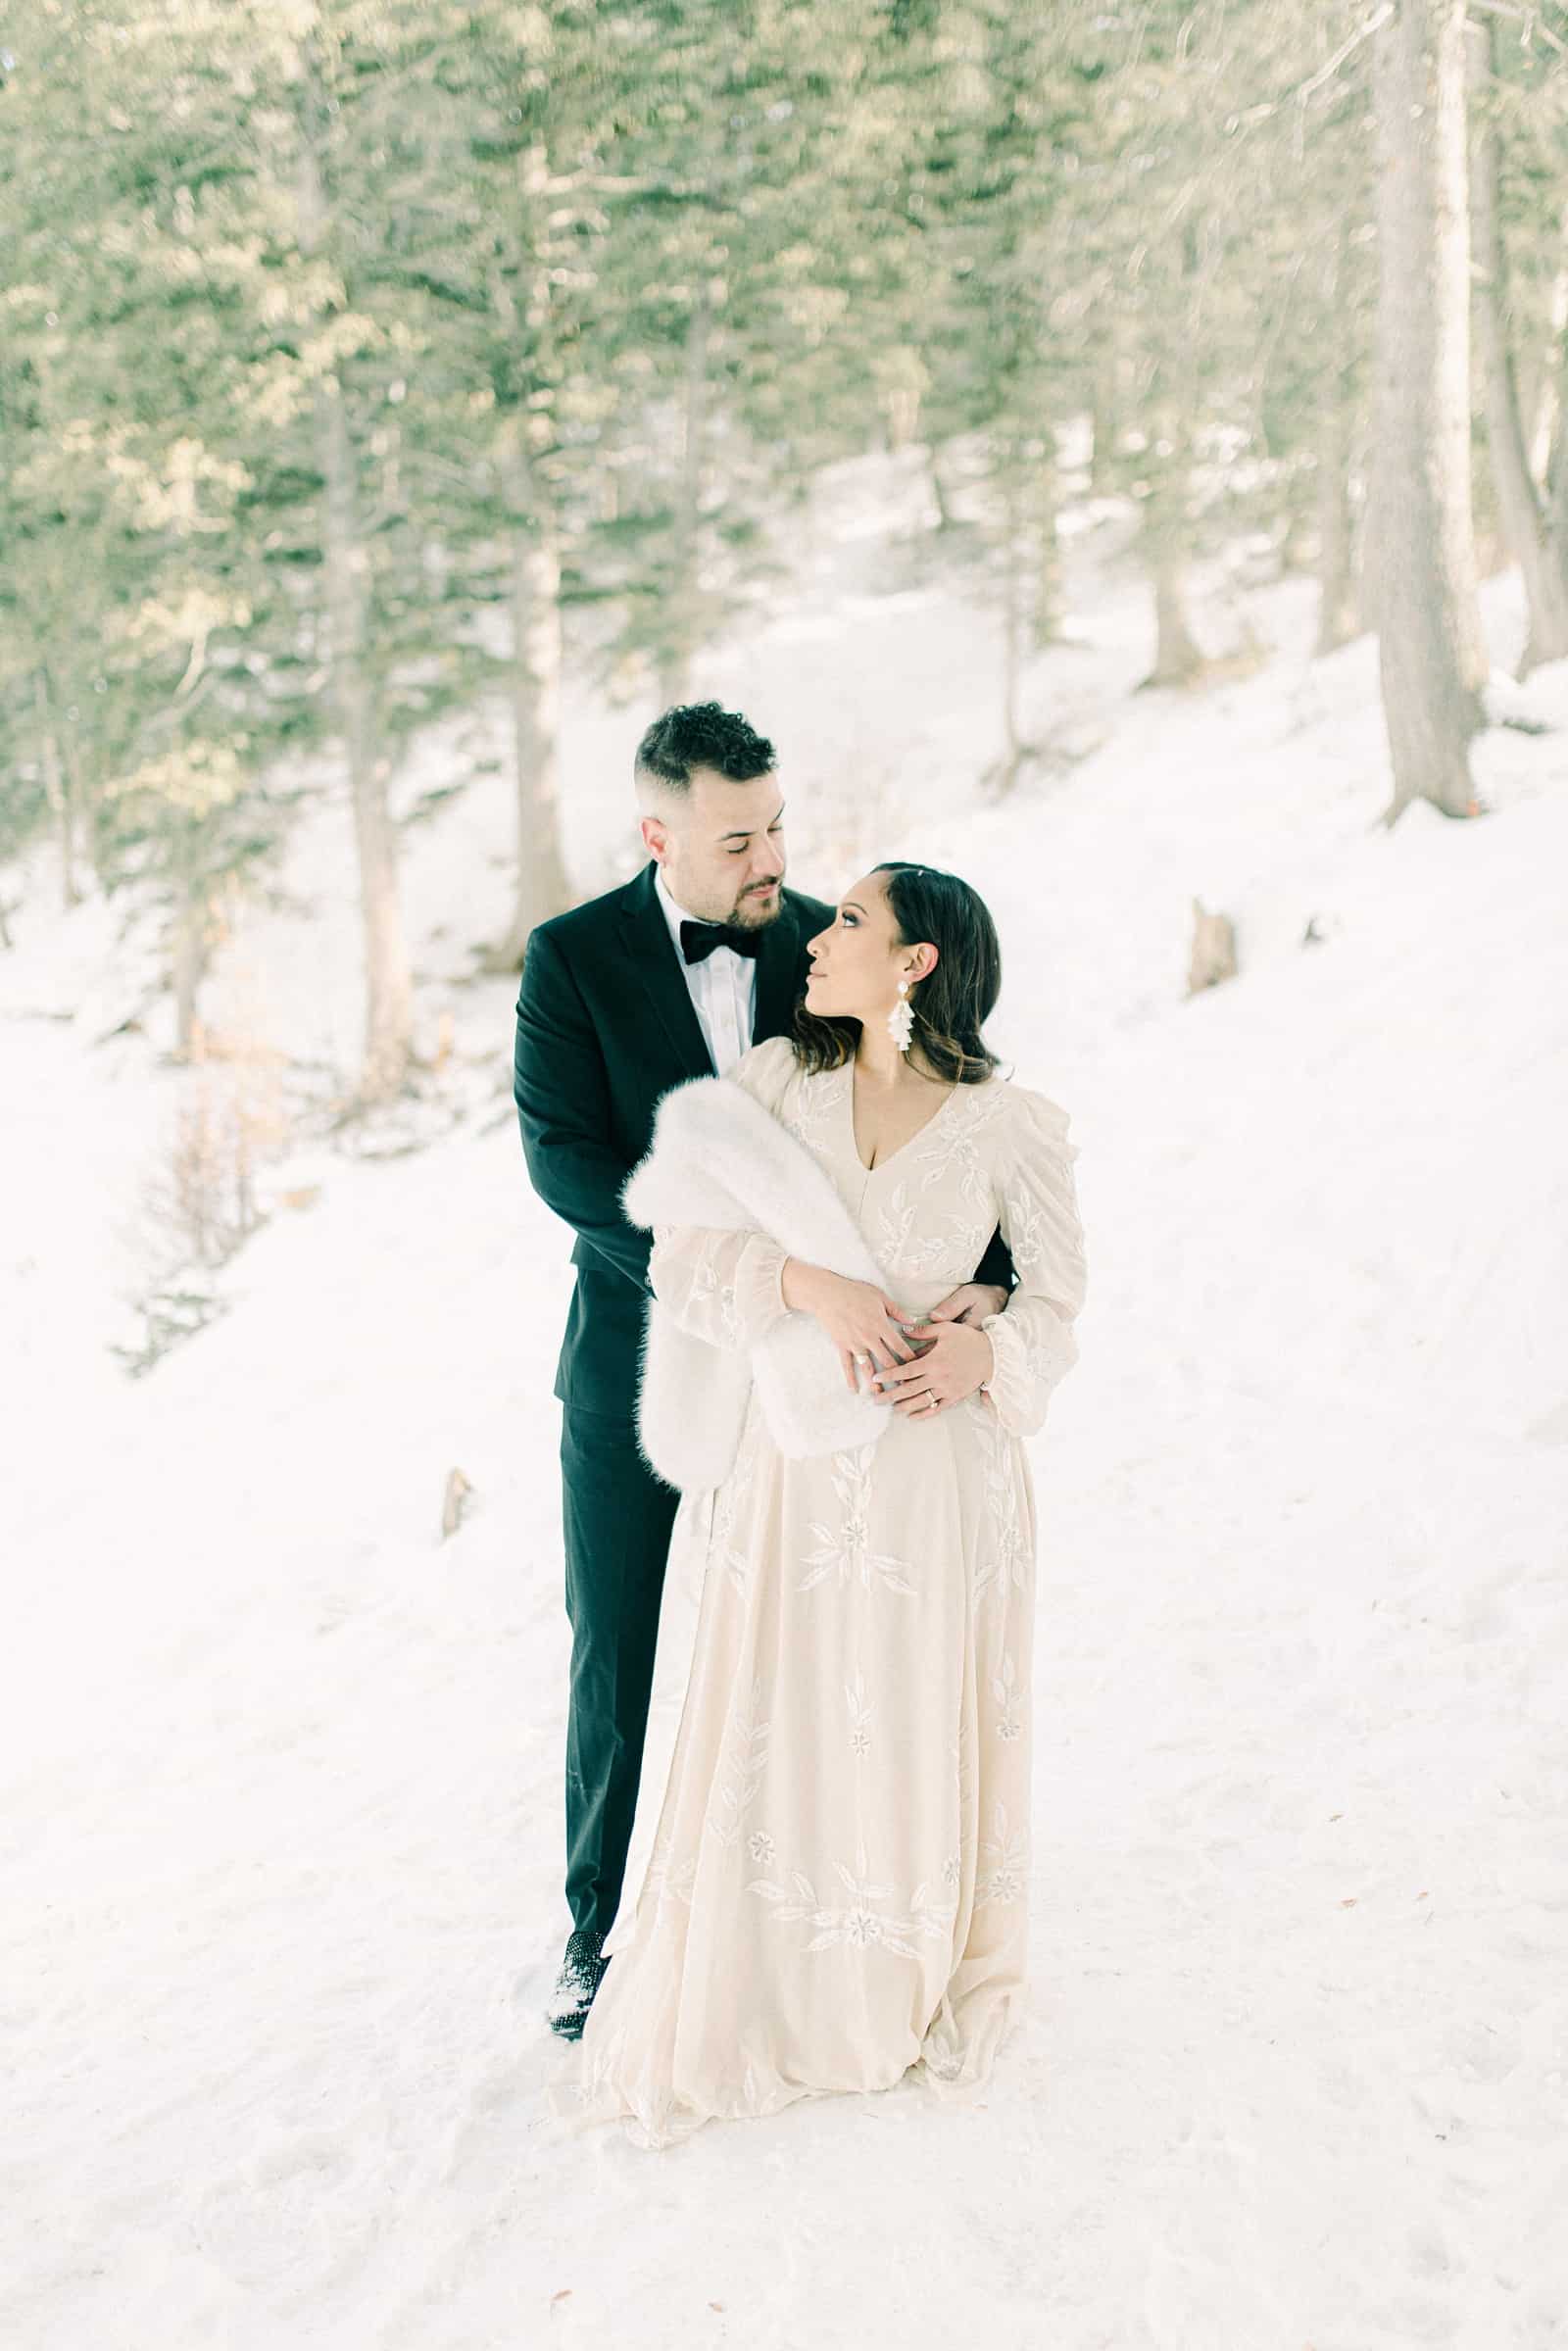 Bride and groom in snowy trees, winter wedding